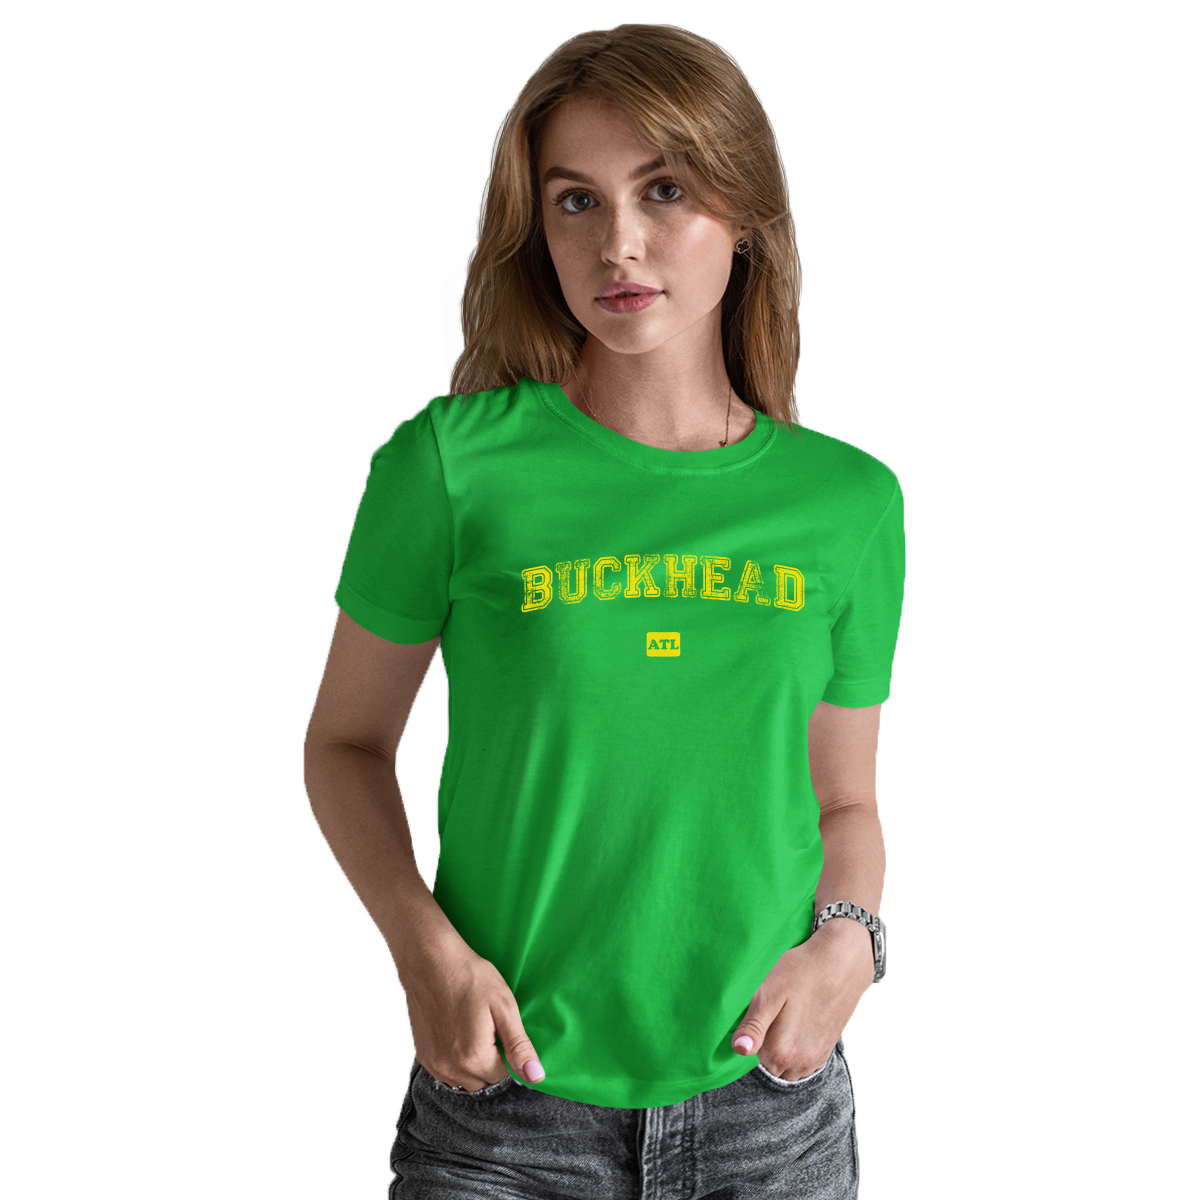 Buckhead ATL Represent Women's T-shirt | Green